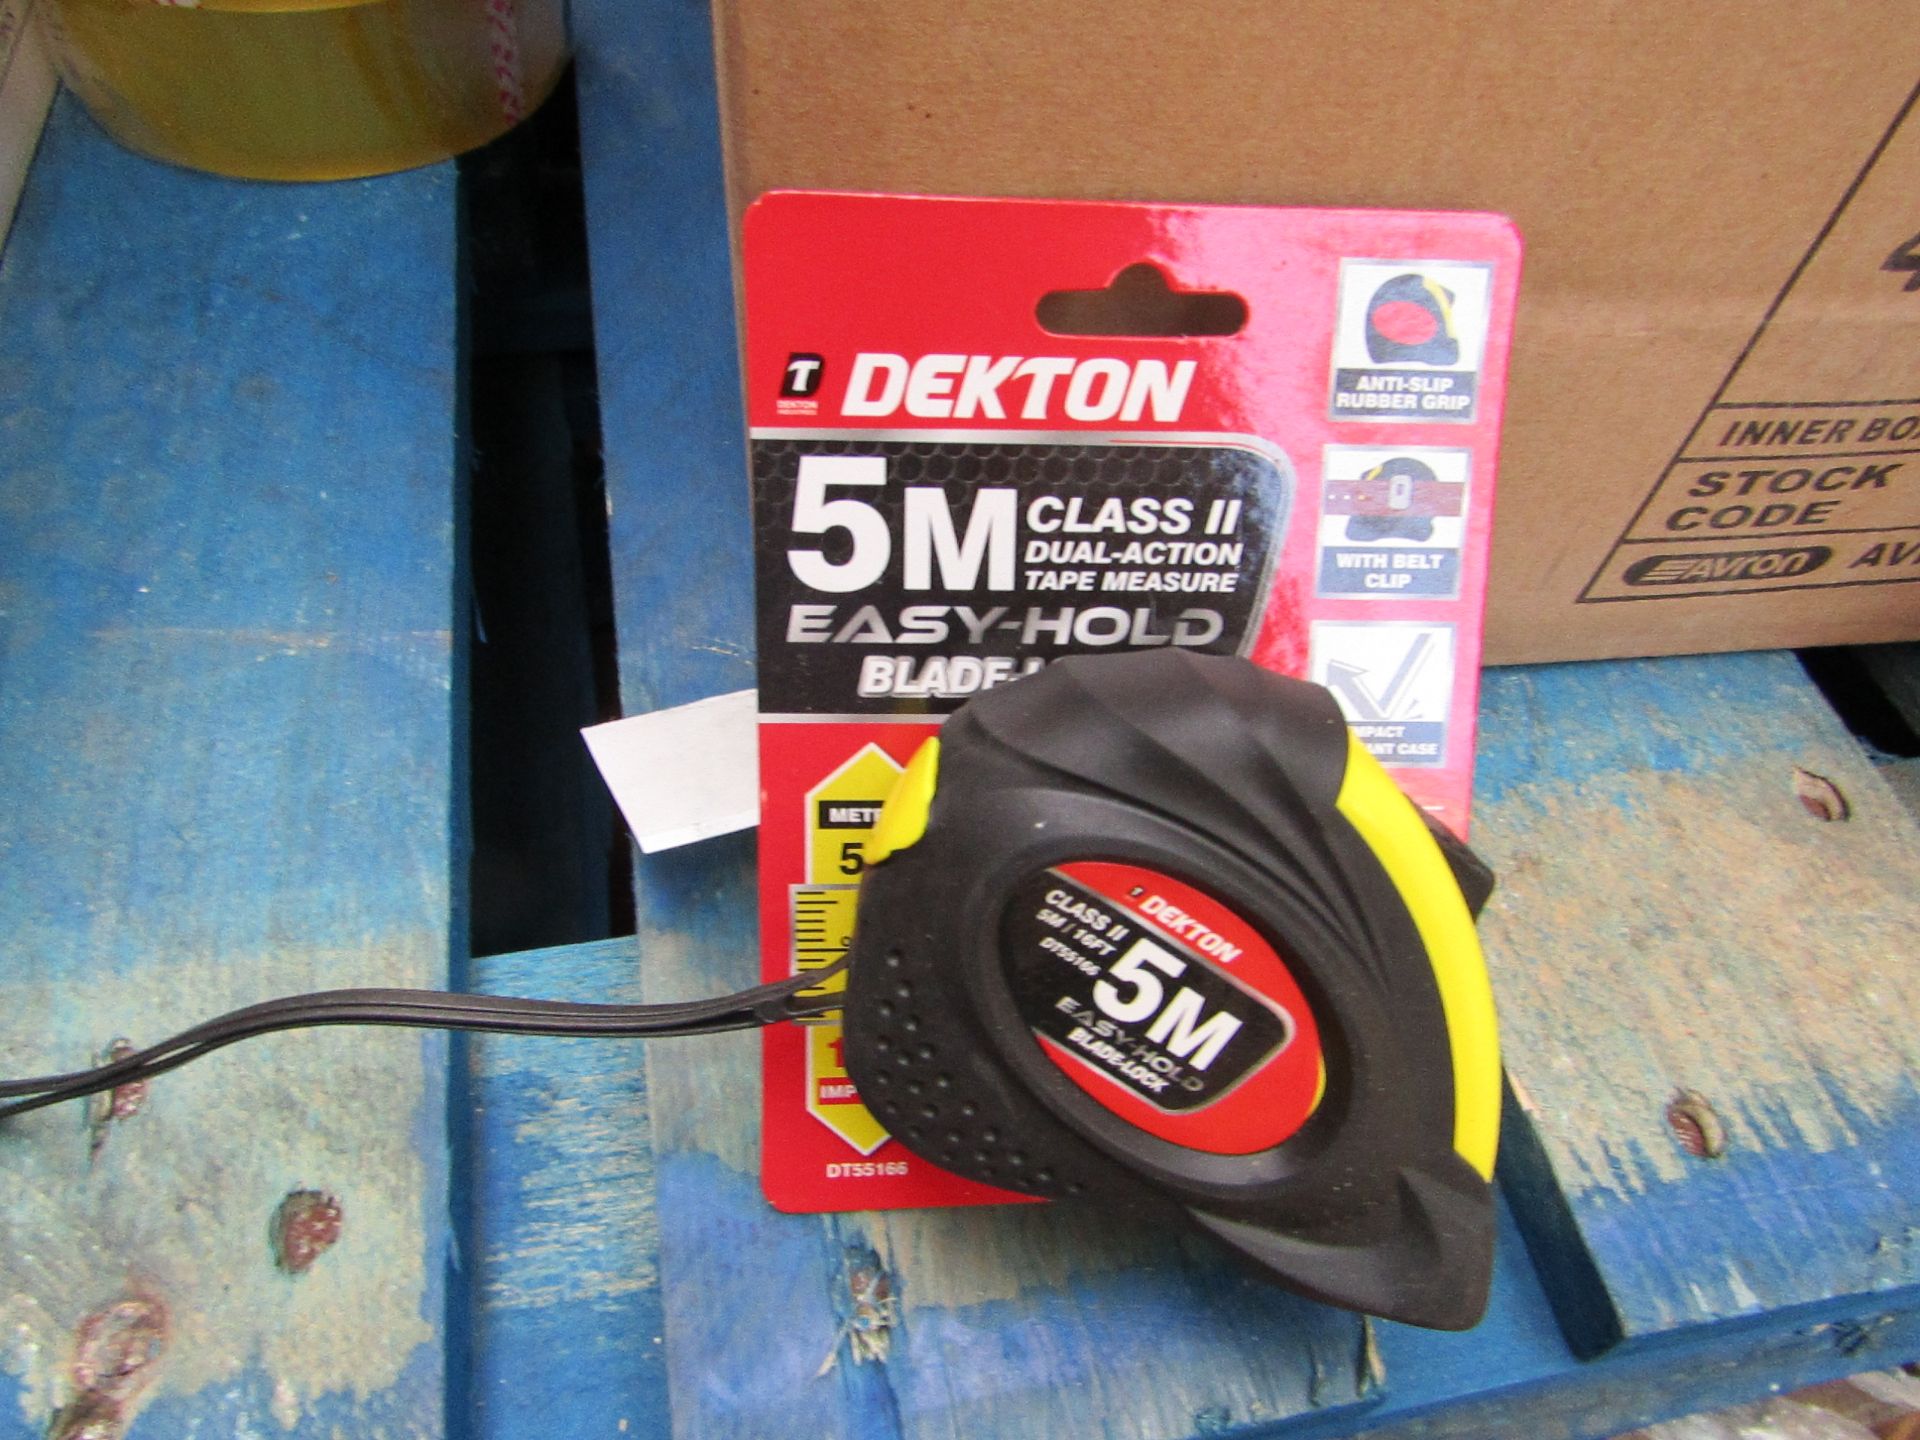 Dekton 5Mtr Tape measure, new